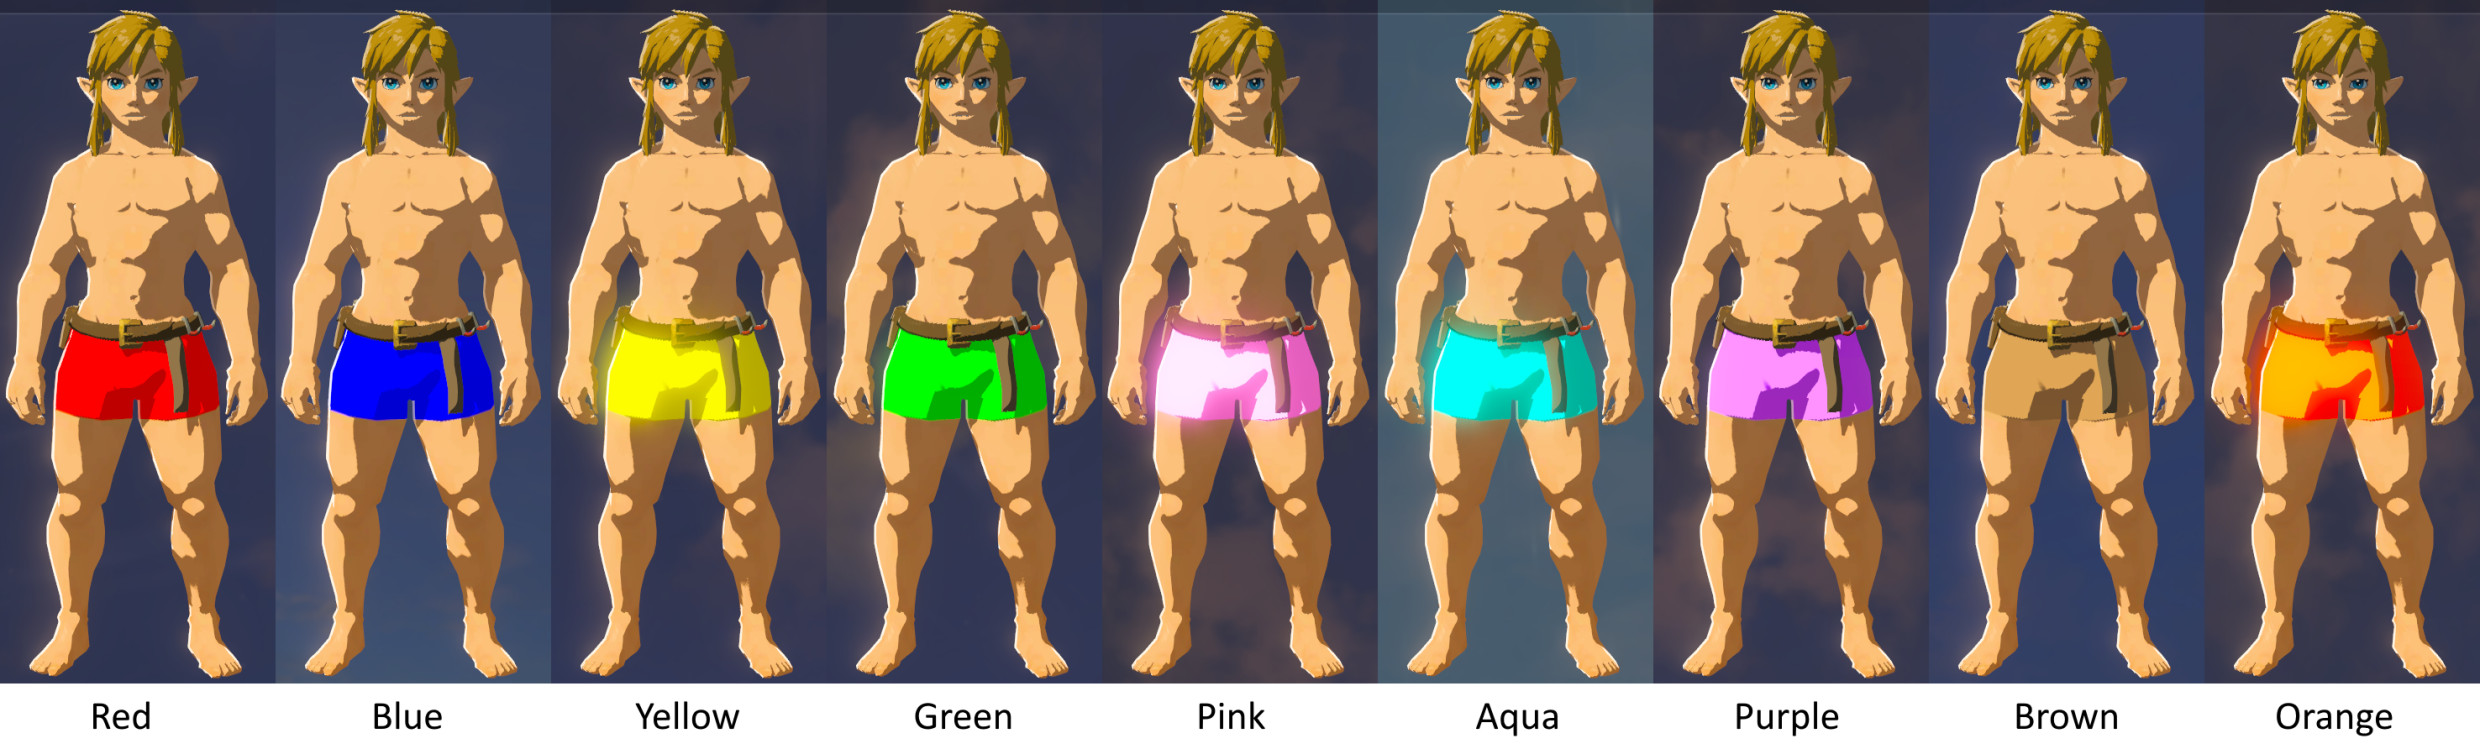 Short Underwear for Muscular Link + 33 Colors [The Legend of Zelda